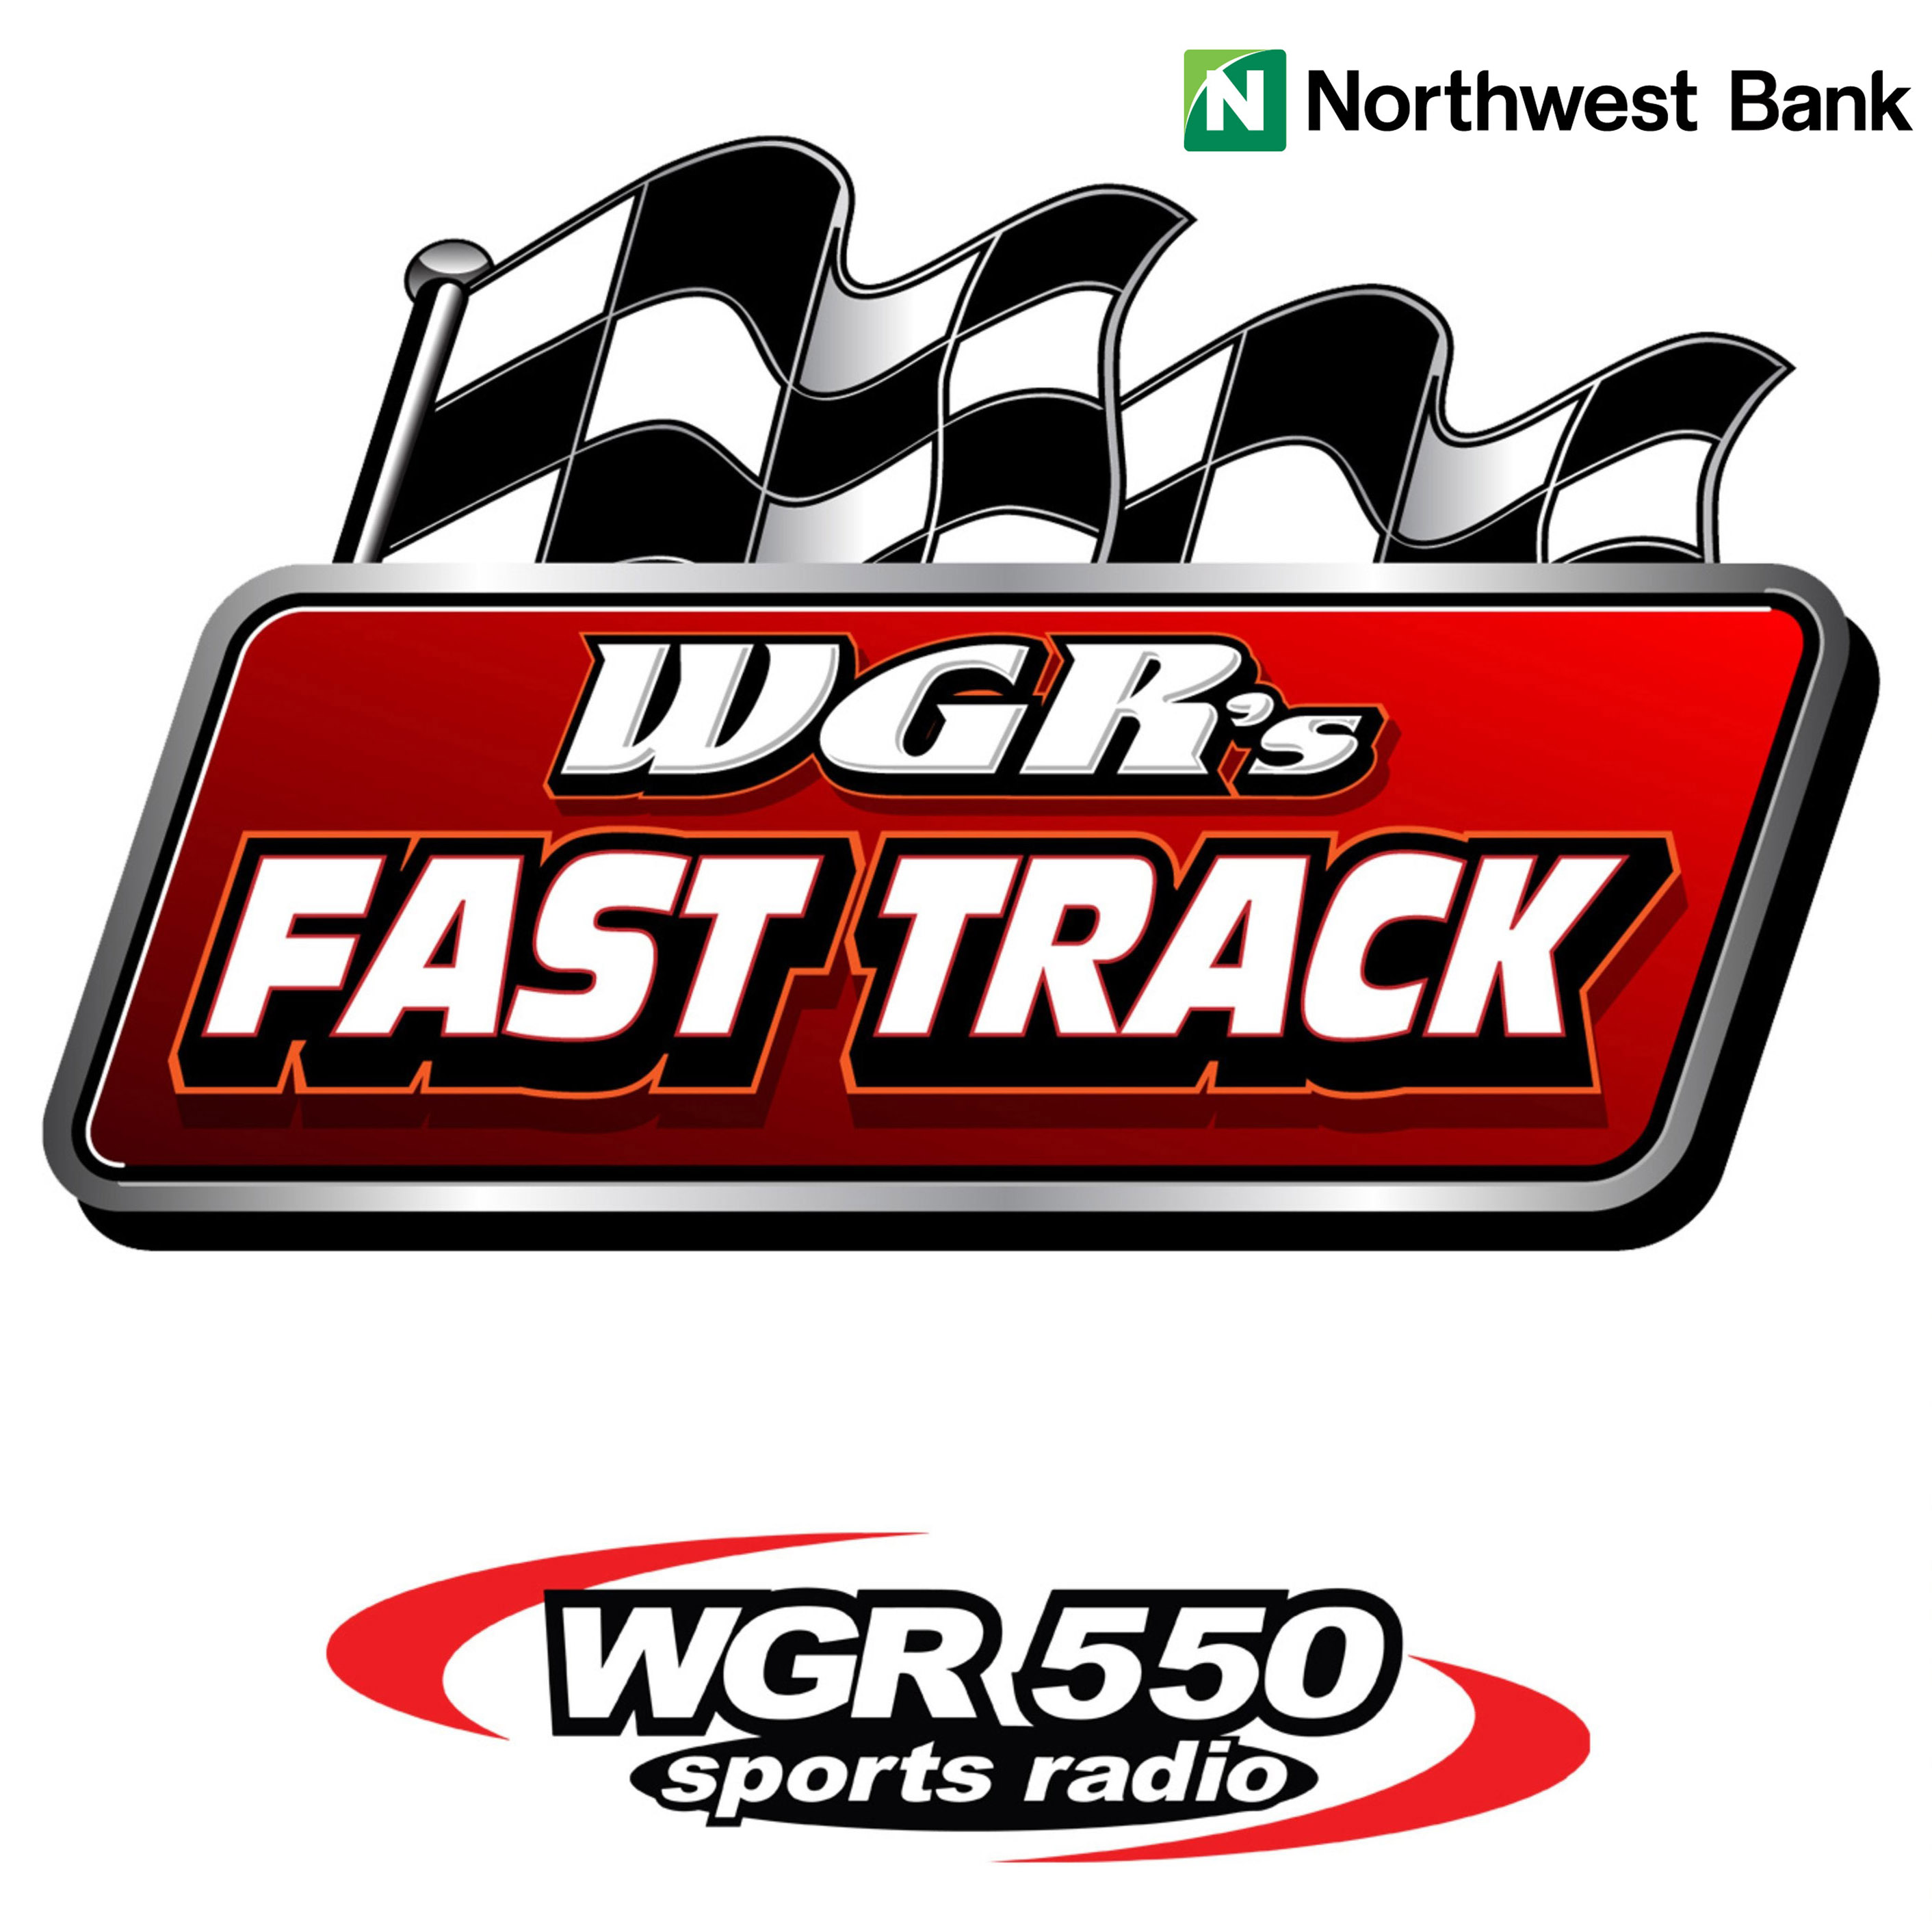 07/14 WGR Fast Track